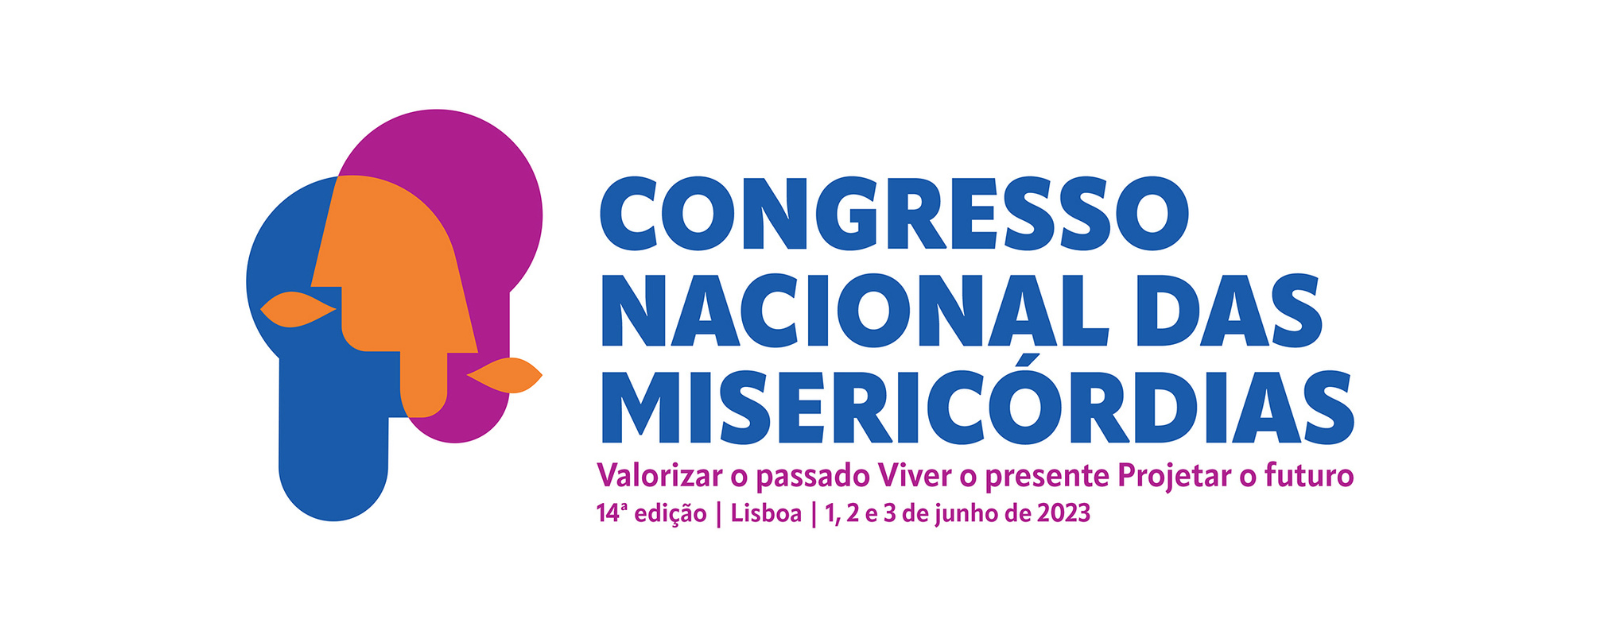 Congresso | Programa completo disponível para consulta online